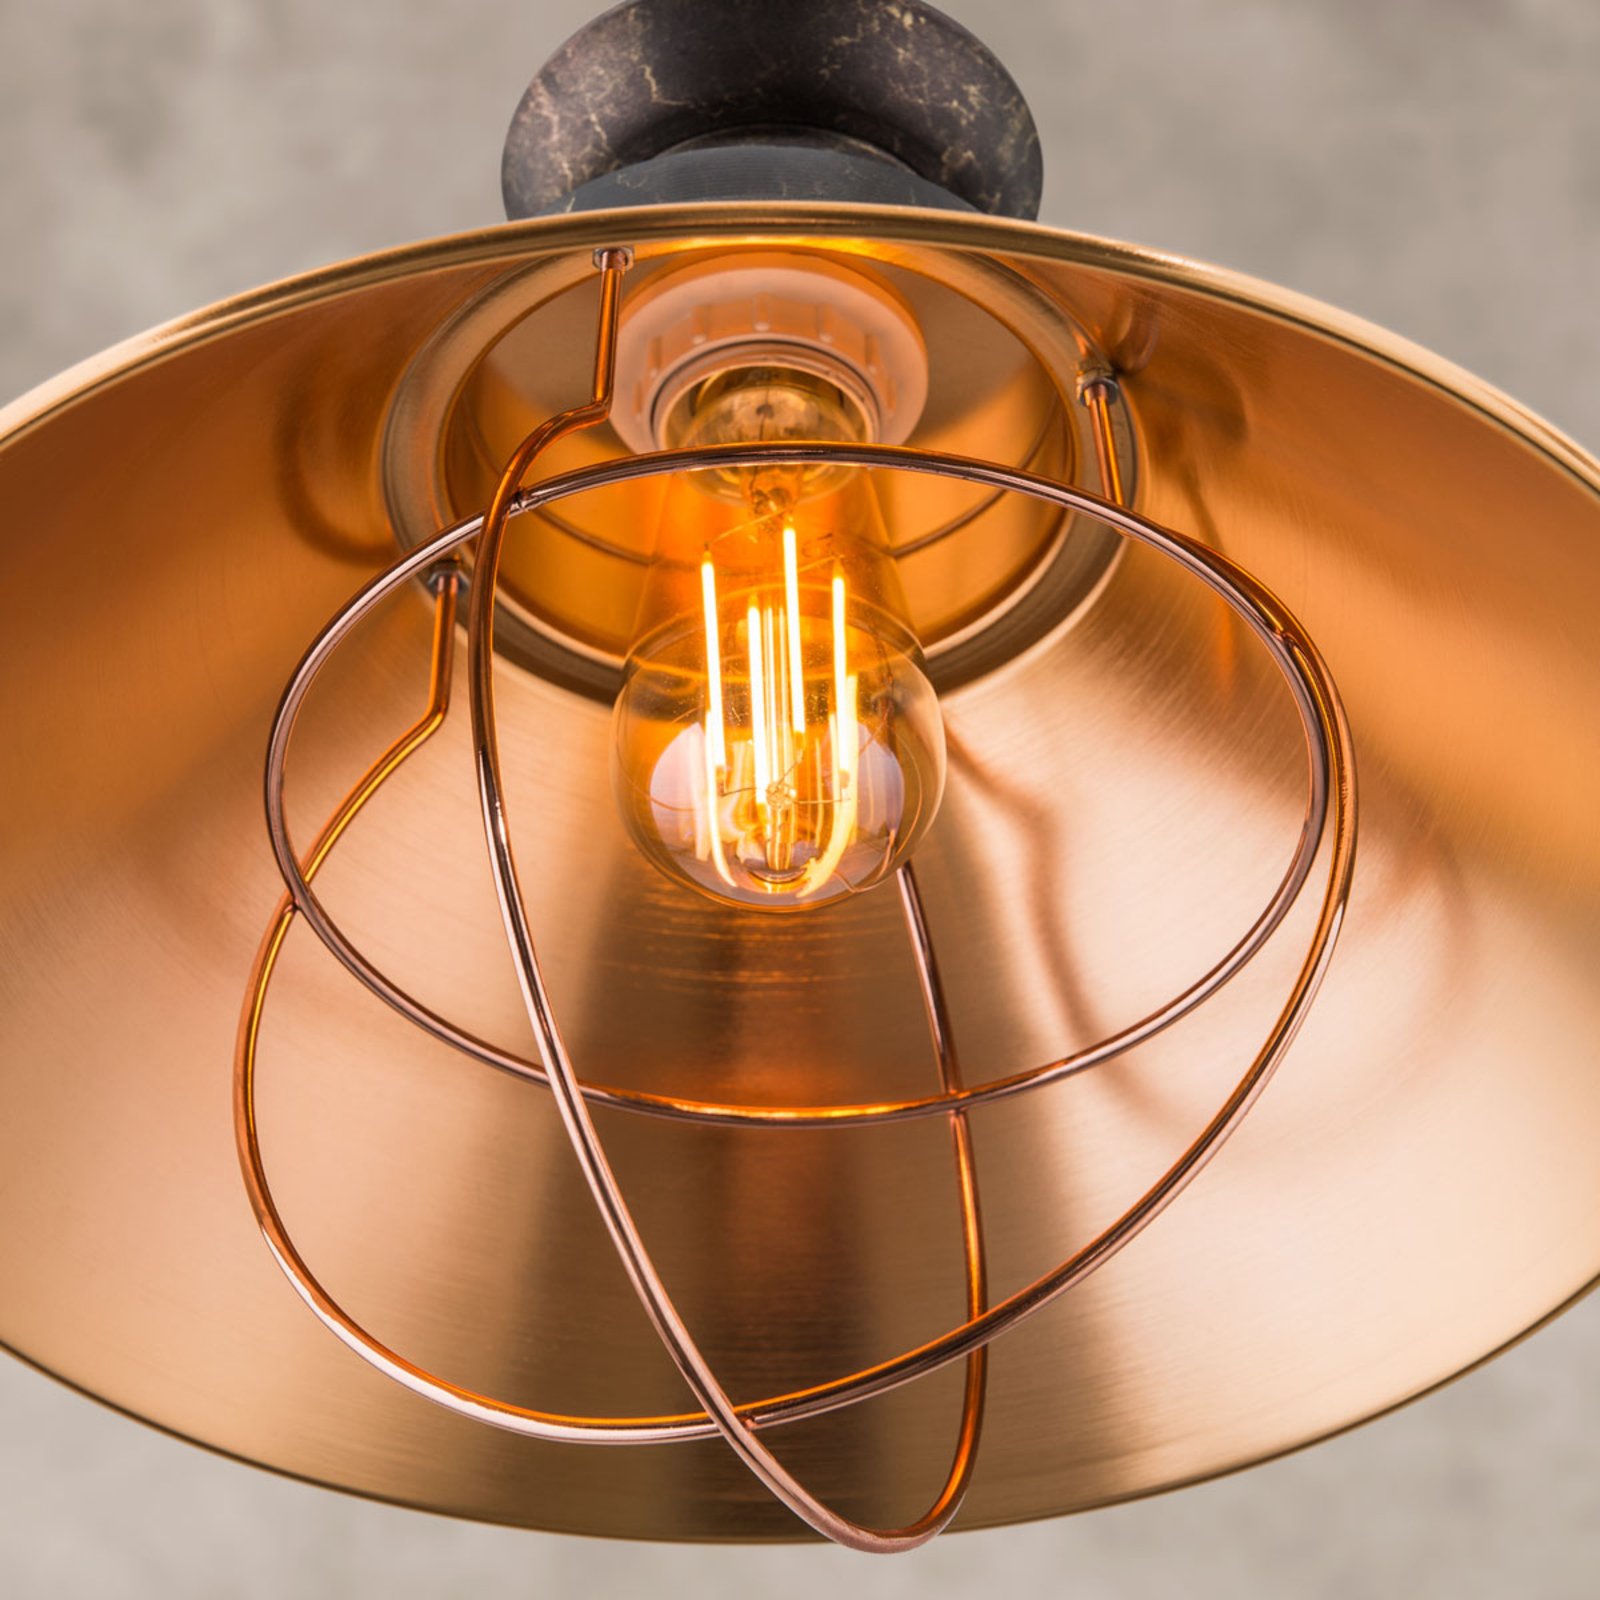 Rustikálna závesná lampa Shanta, jedno-plameňová